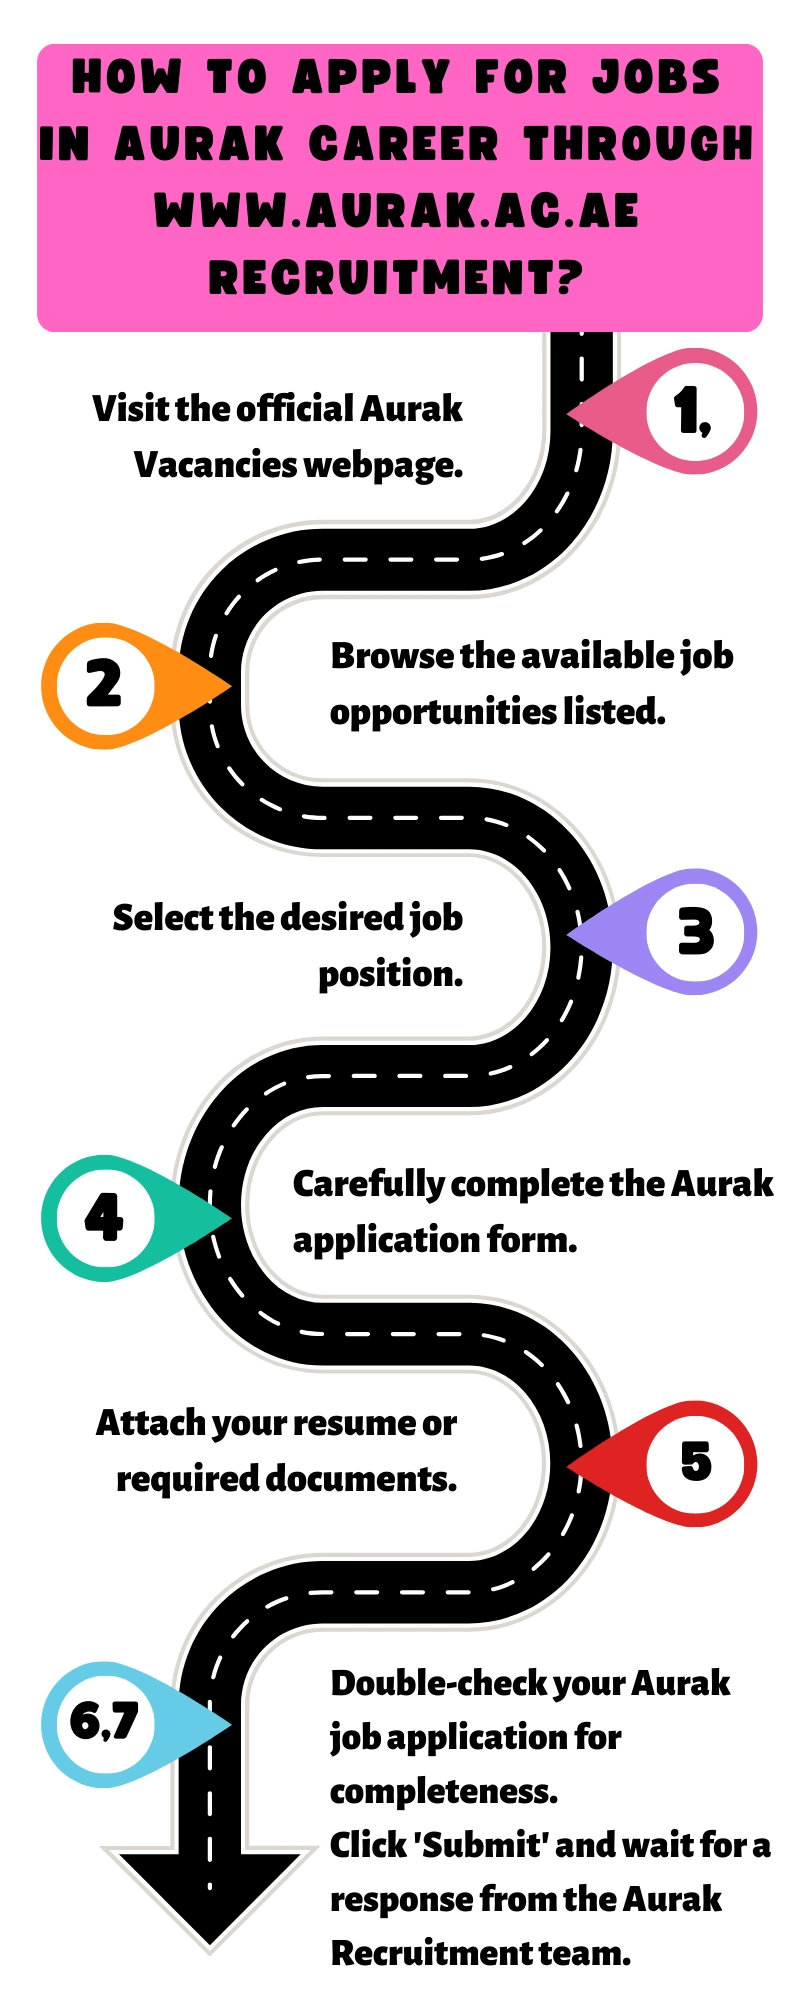 How to Apply for Jobs in Aurak Career through www.aurak.ac.ae recruitment?